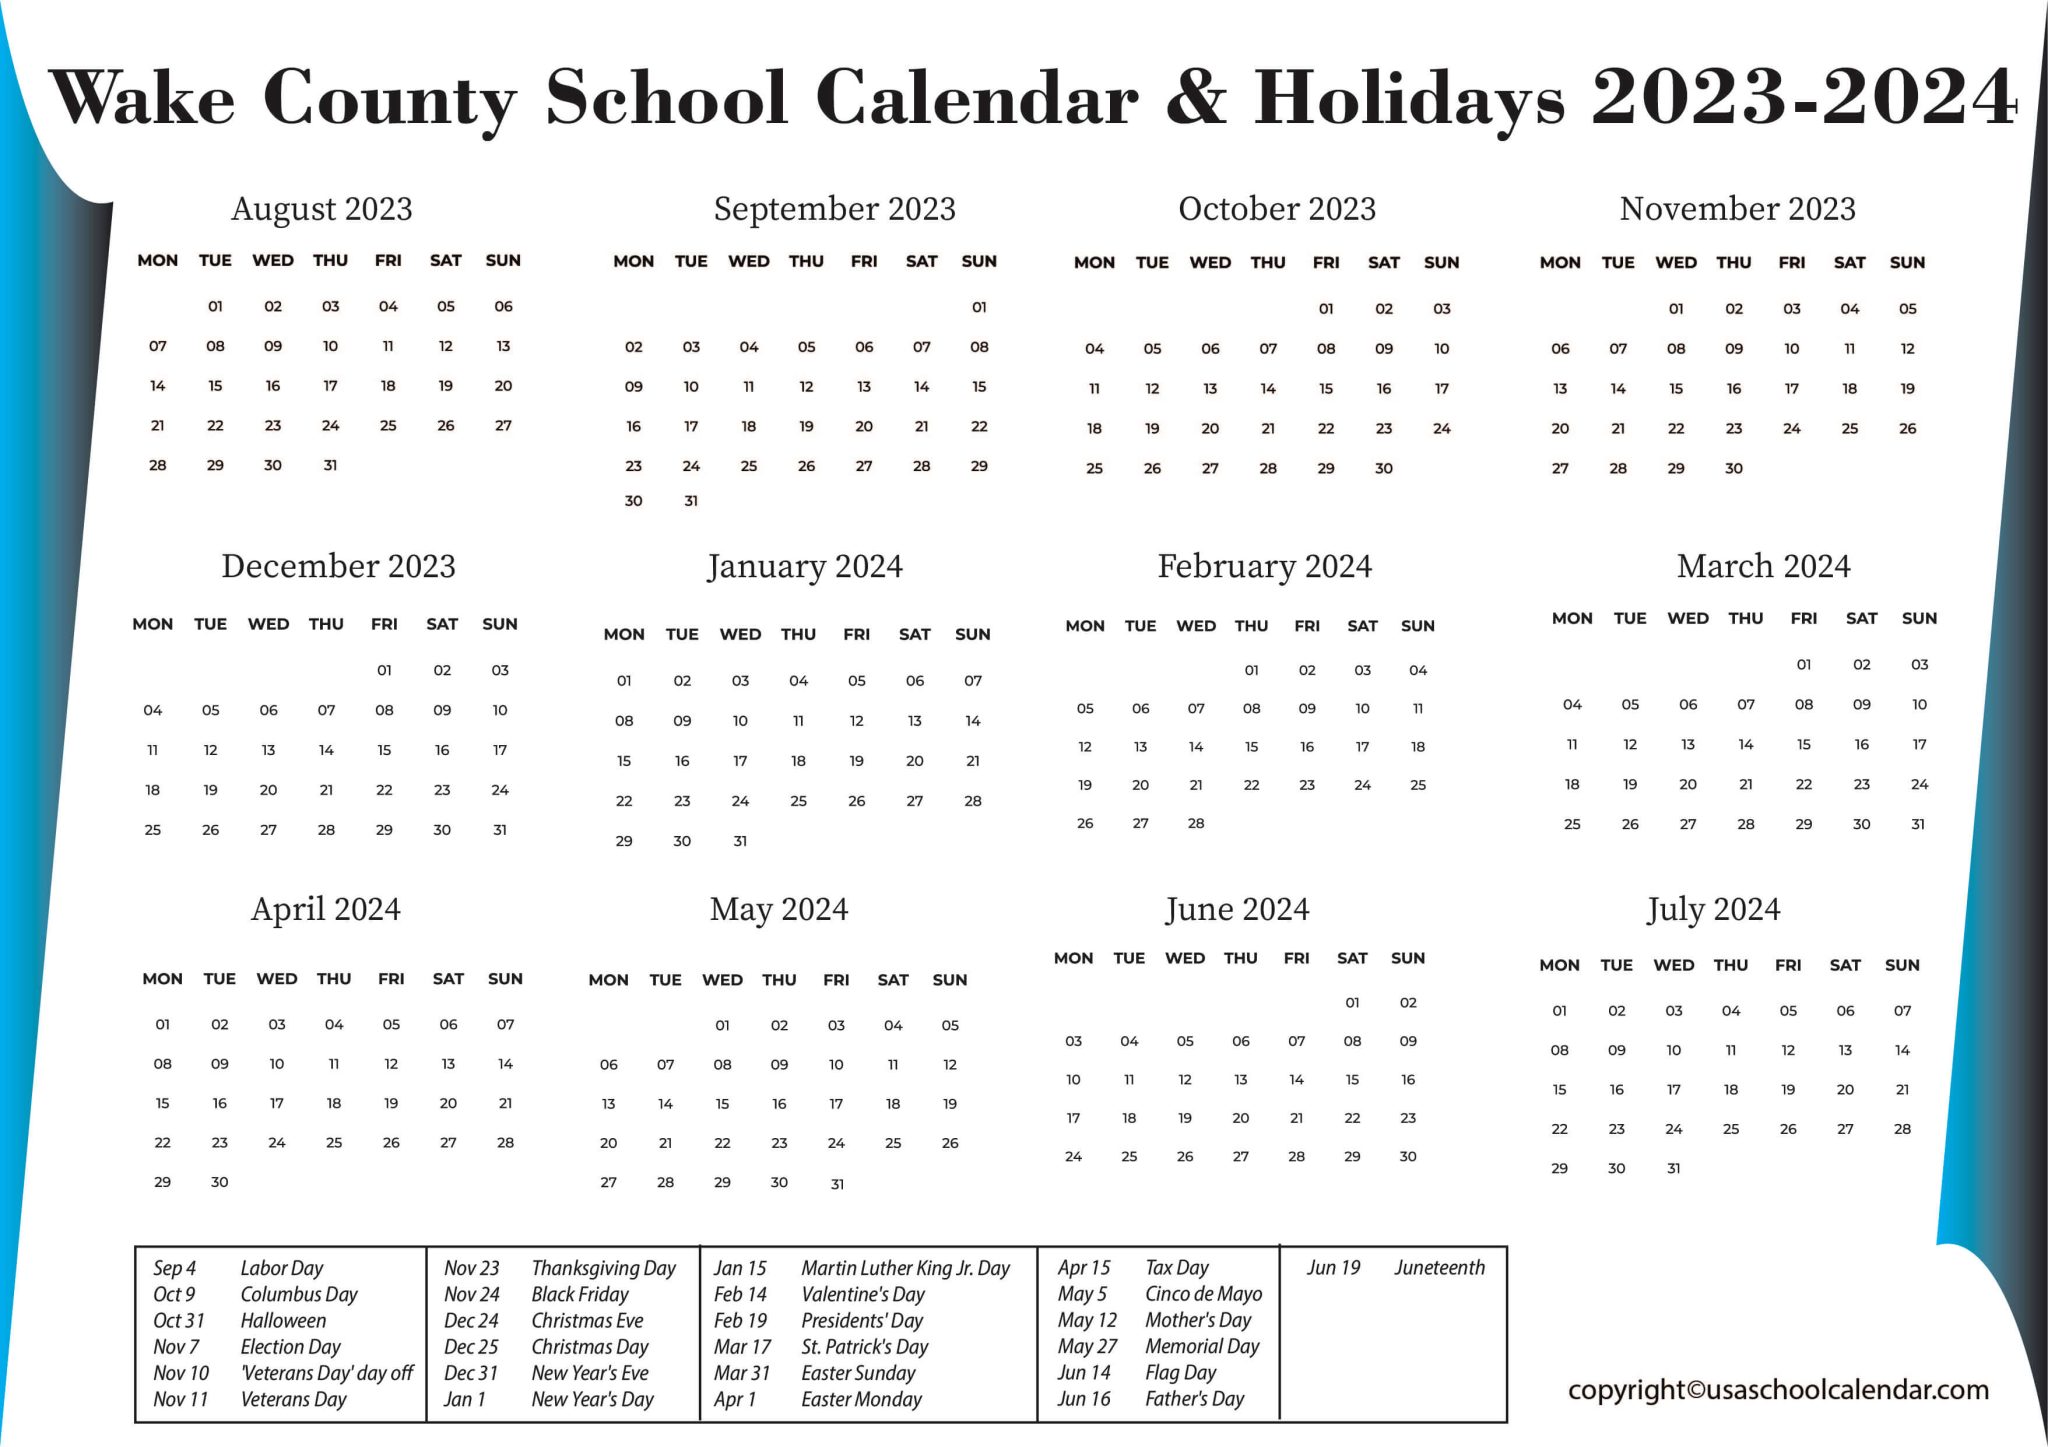 wake-county-school-calendar-holidays-2023-2024